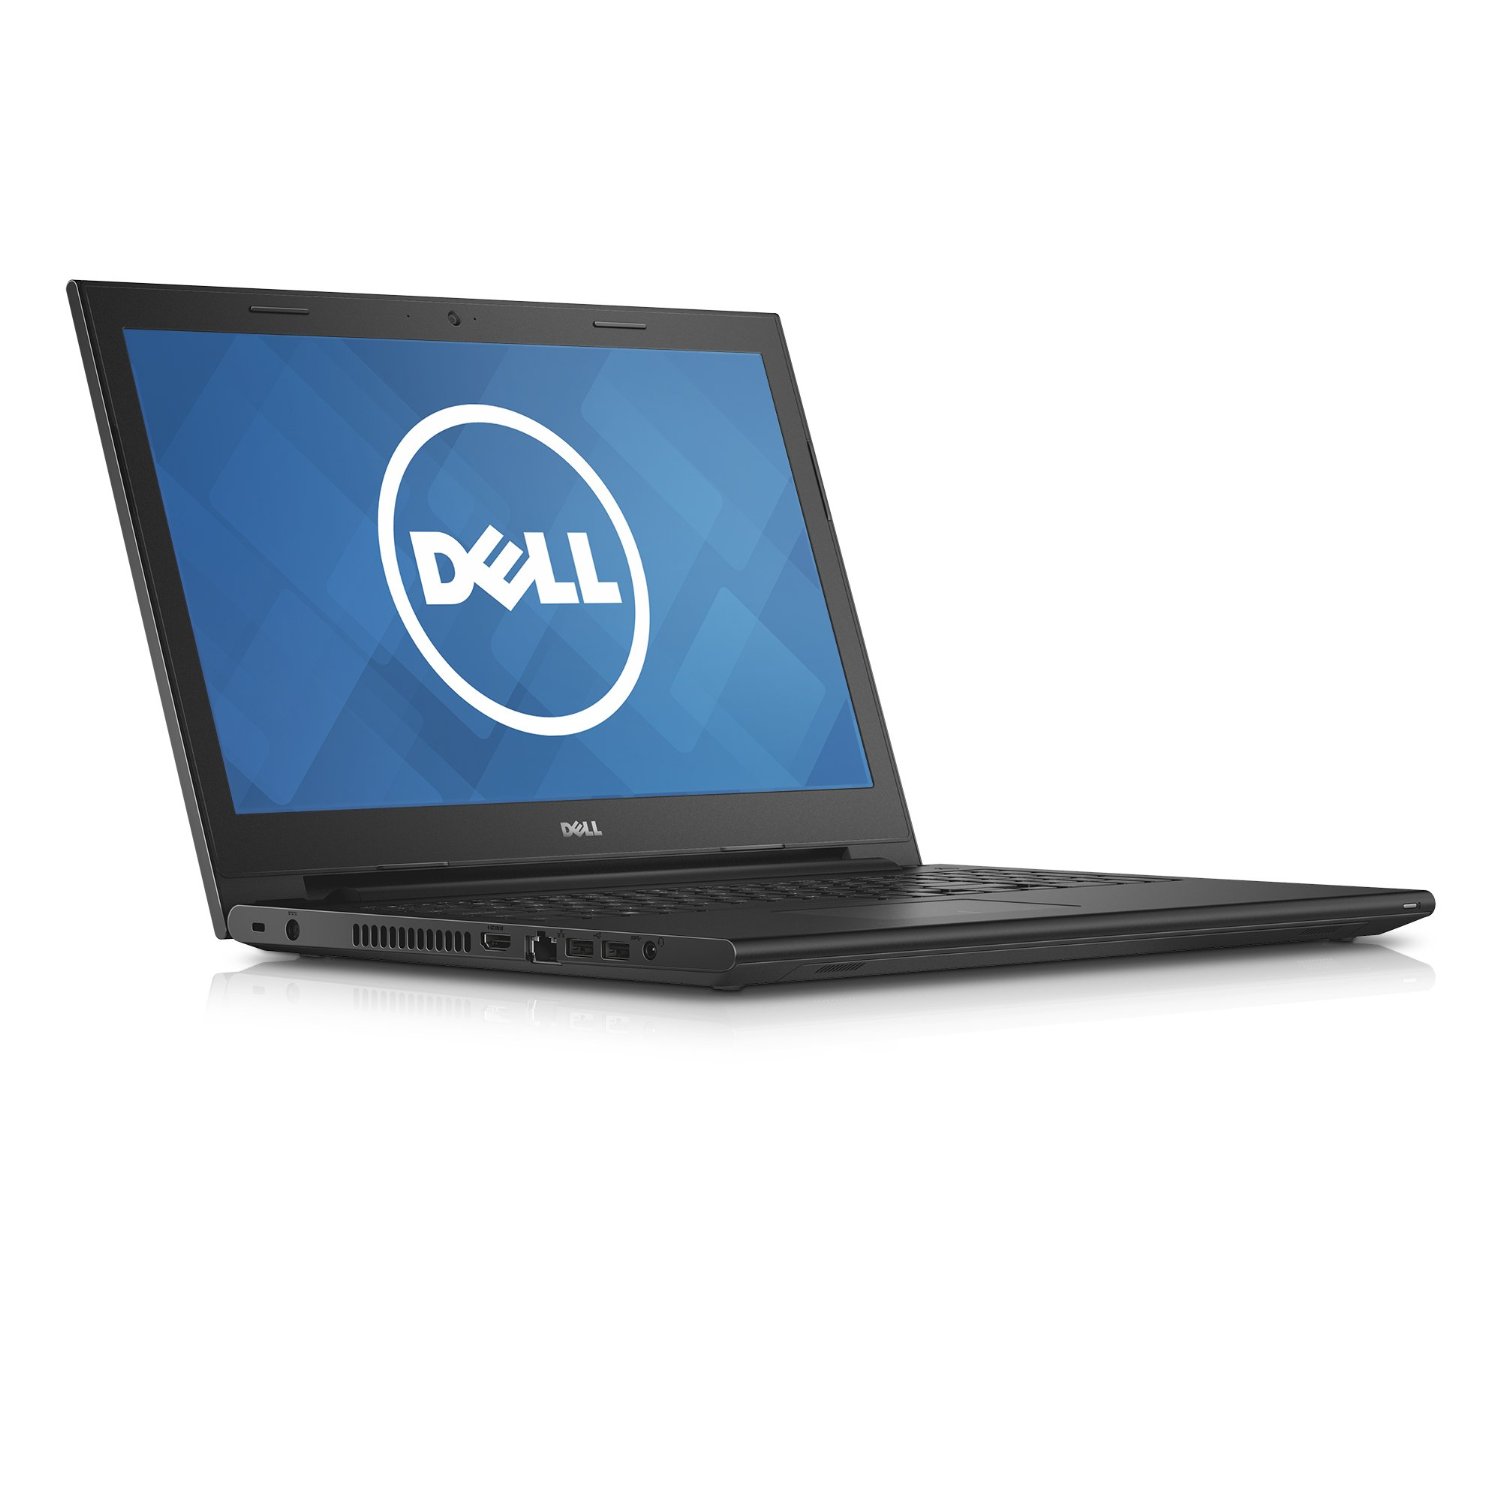 Laptop Dell Inspiron N3542A Black, Core i3-4005U/4GB/500GB/15.6